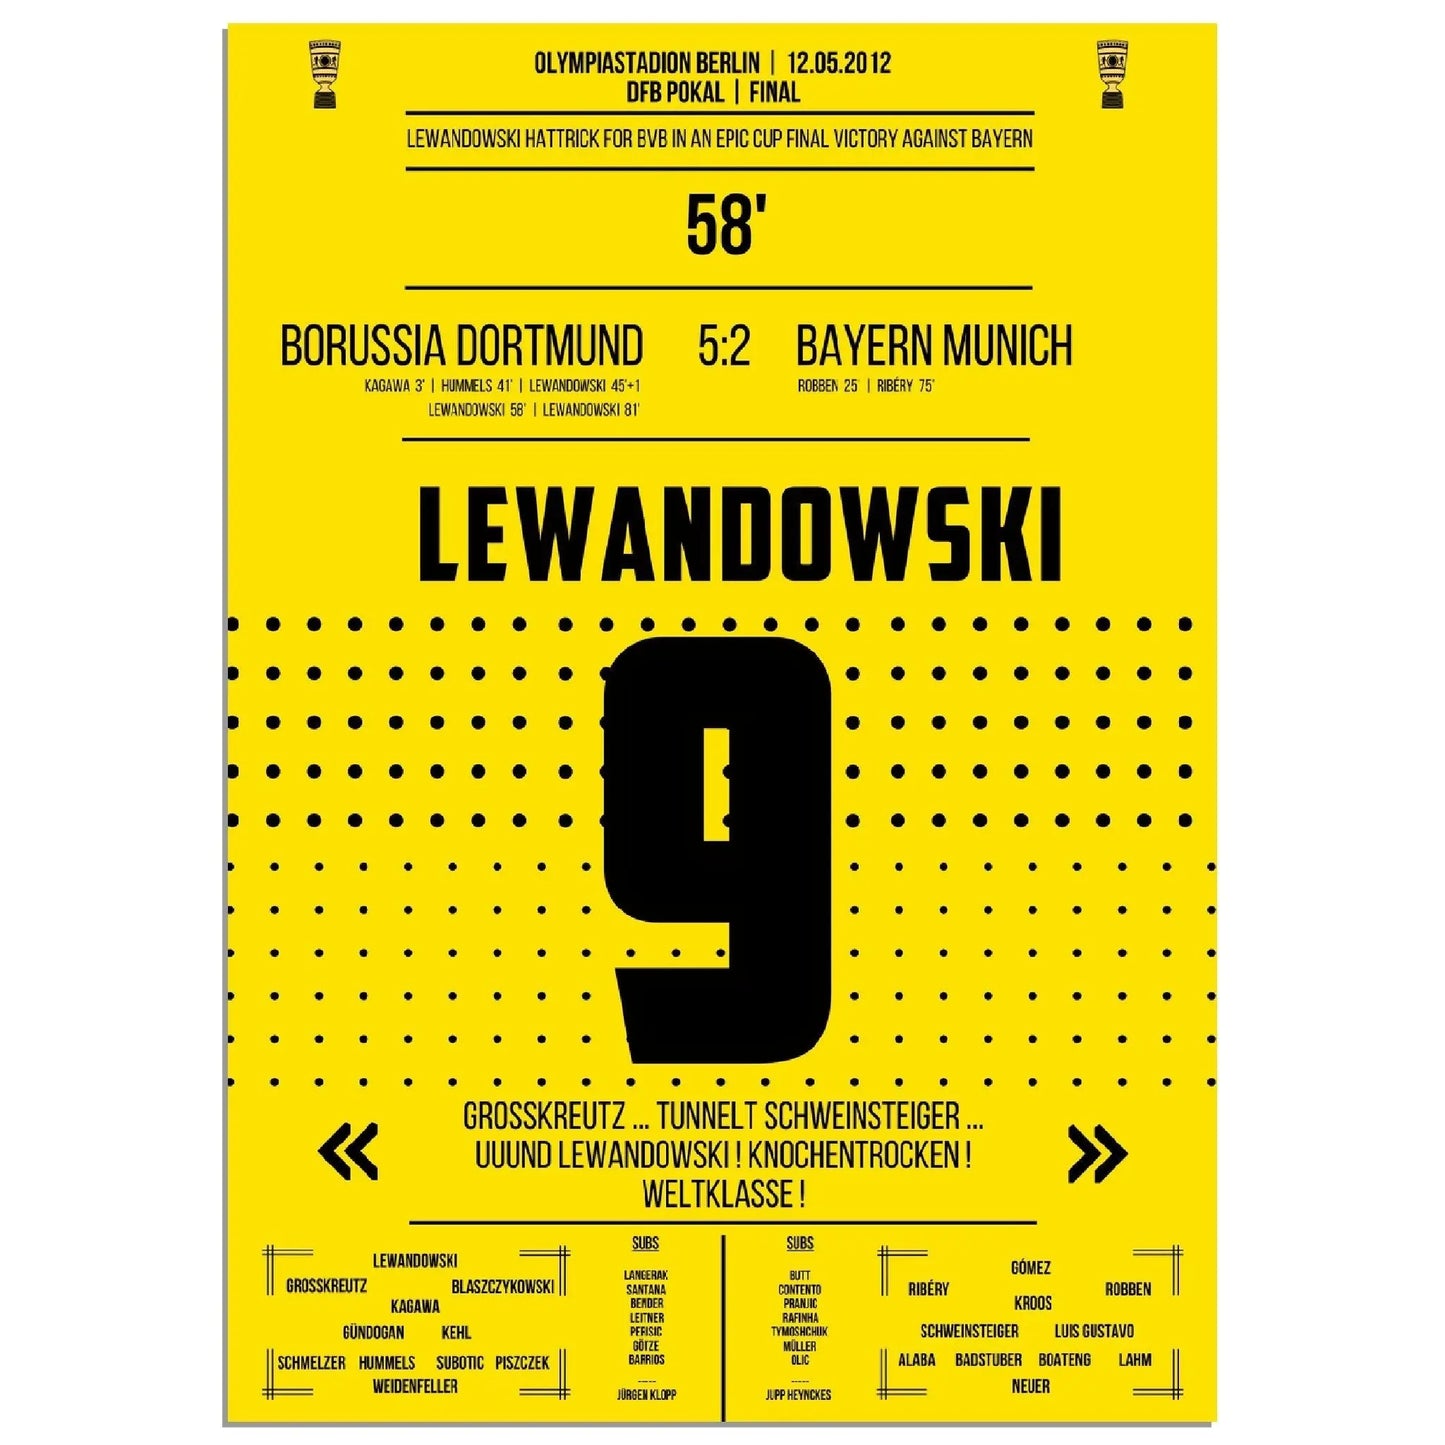 Lewandowski Hattrick im DFB Pokal Finale gegen Bayern 2012 